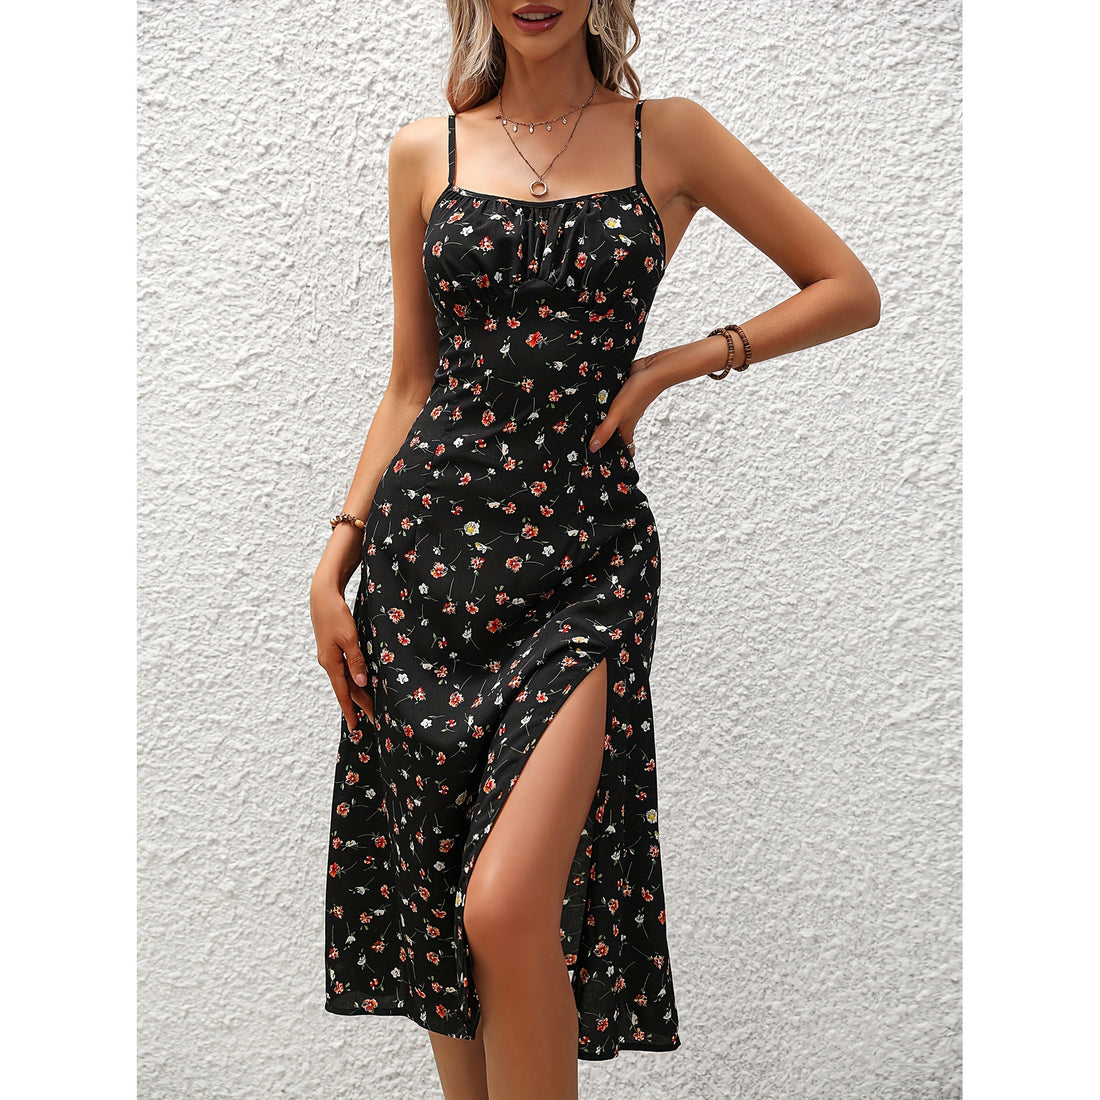 Playful Innocence, New Polka Dot Print Spaghetti Strap Summer Sexy Slit Mid Length Dress For Women